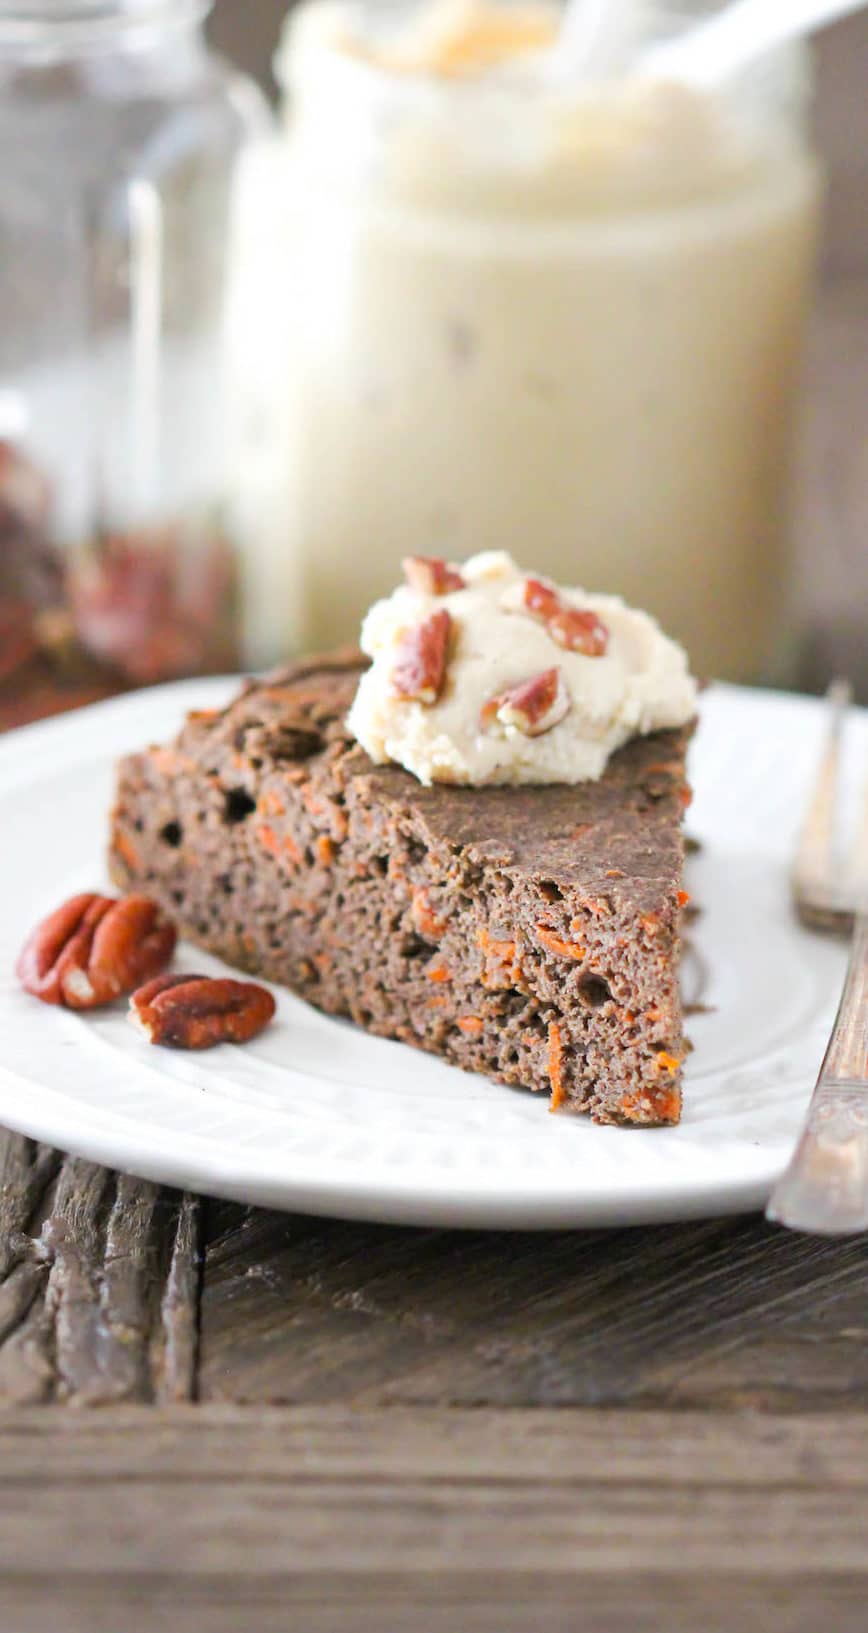 Healthy Buckwheat Carrot Cake (gluten free, vegan) - Healthy Dessert Recipes at Desserts with Benefits